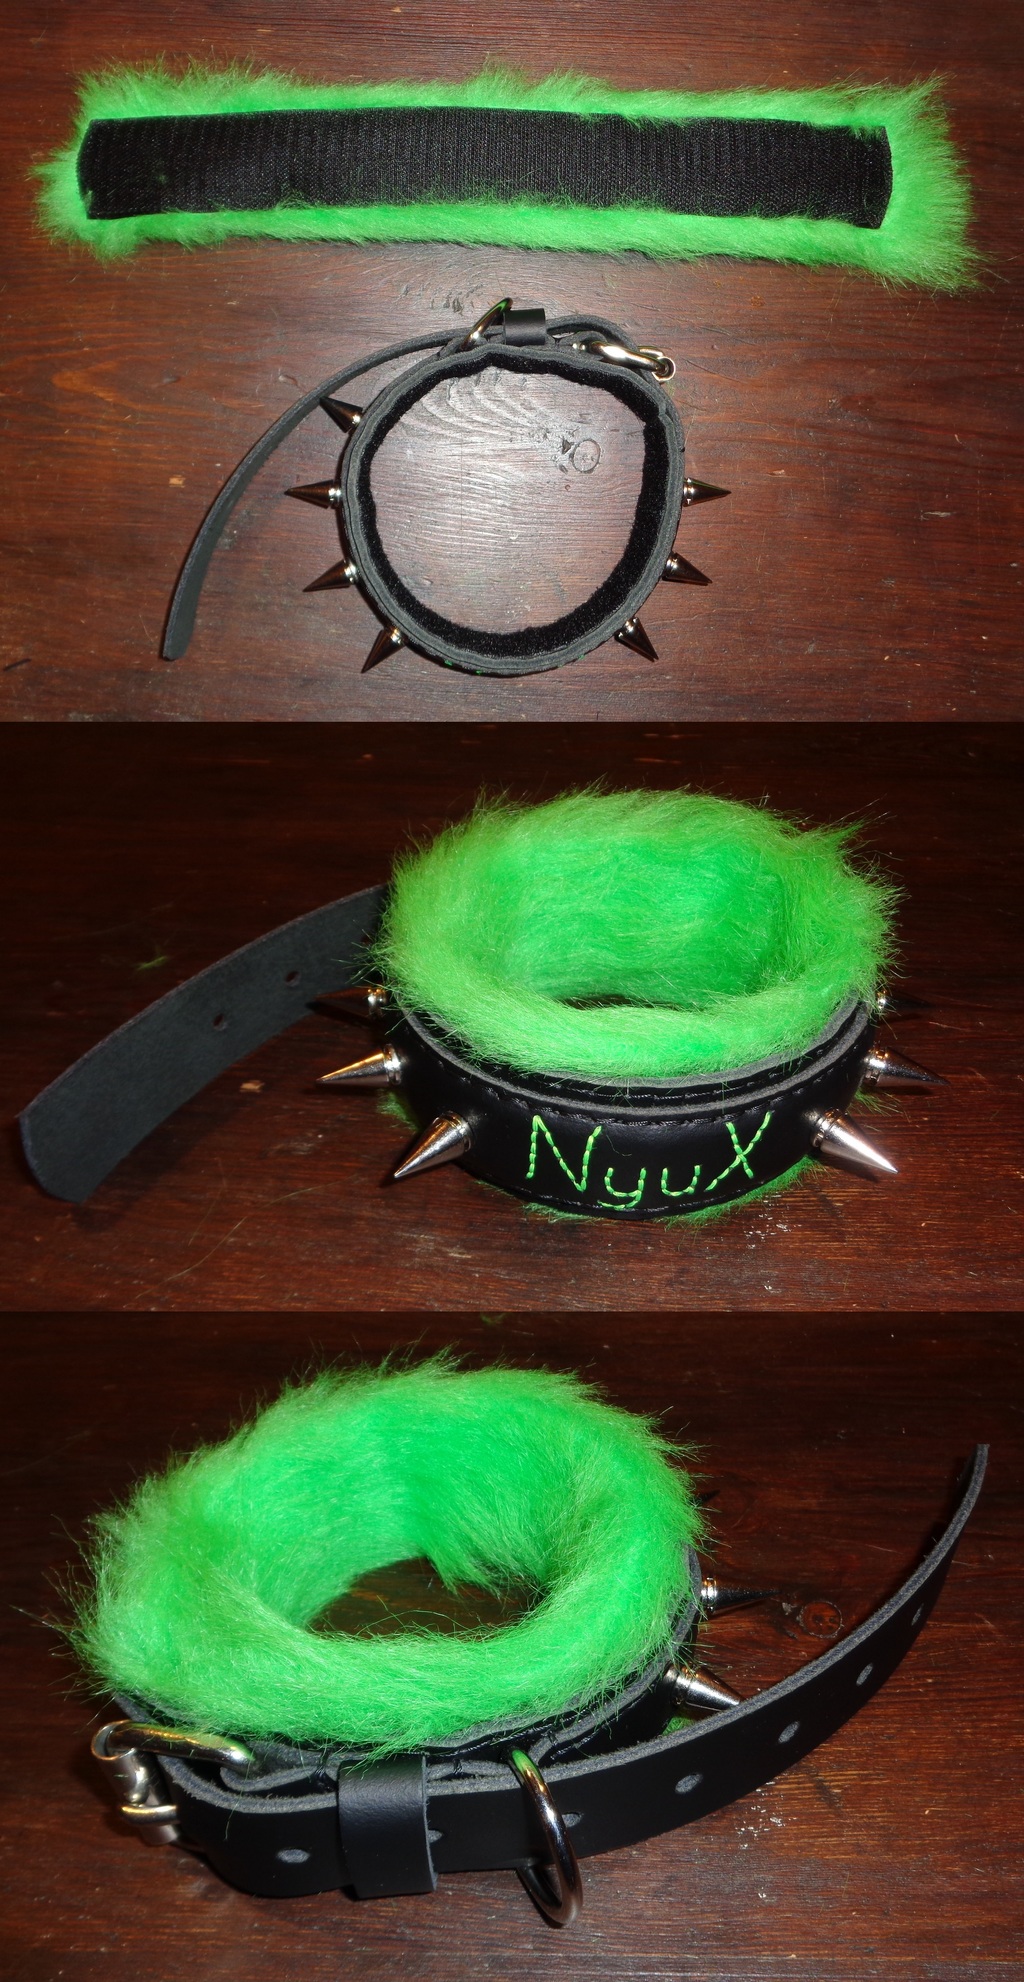 Collar for NyuX (Suitcollar)